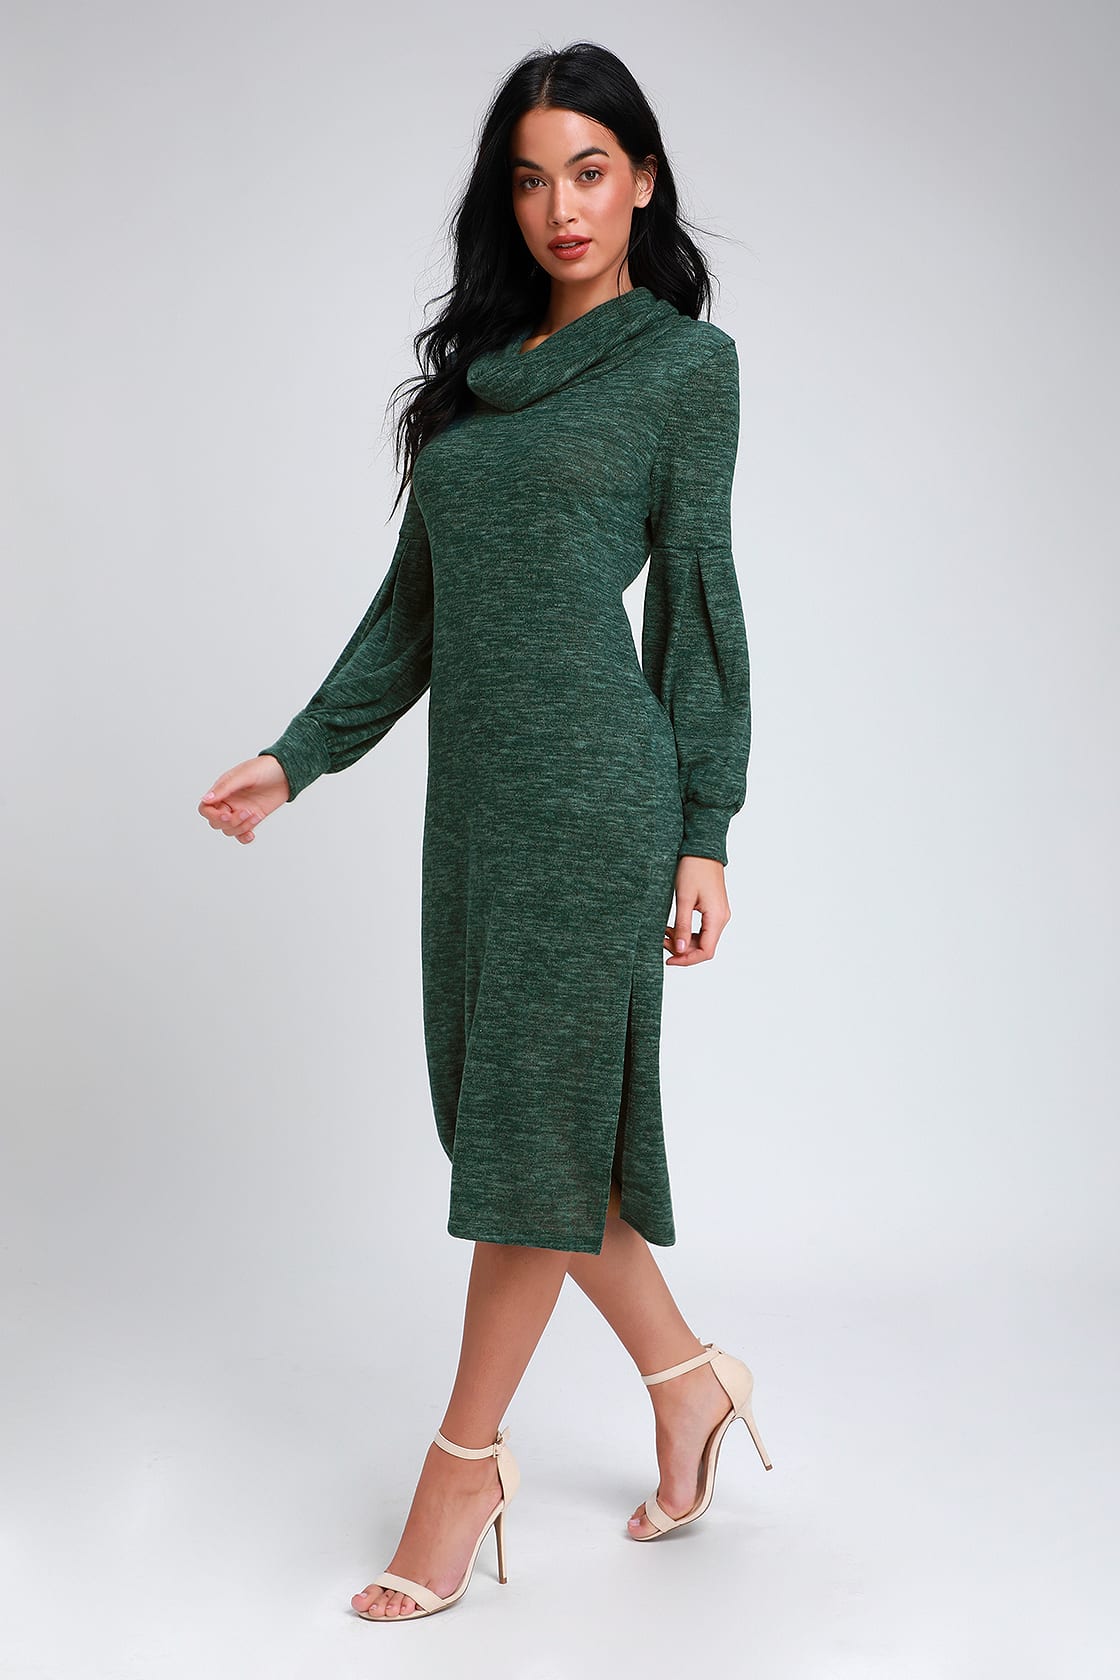 Heathered Dark Green Midi Dress - Cowl Neck Dress - Sweater Dress - Lulus